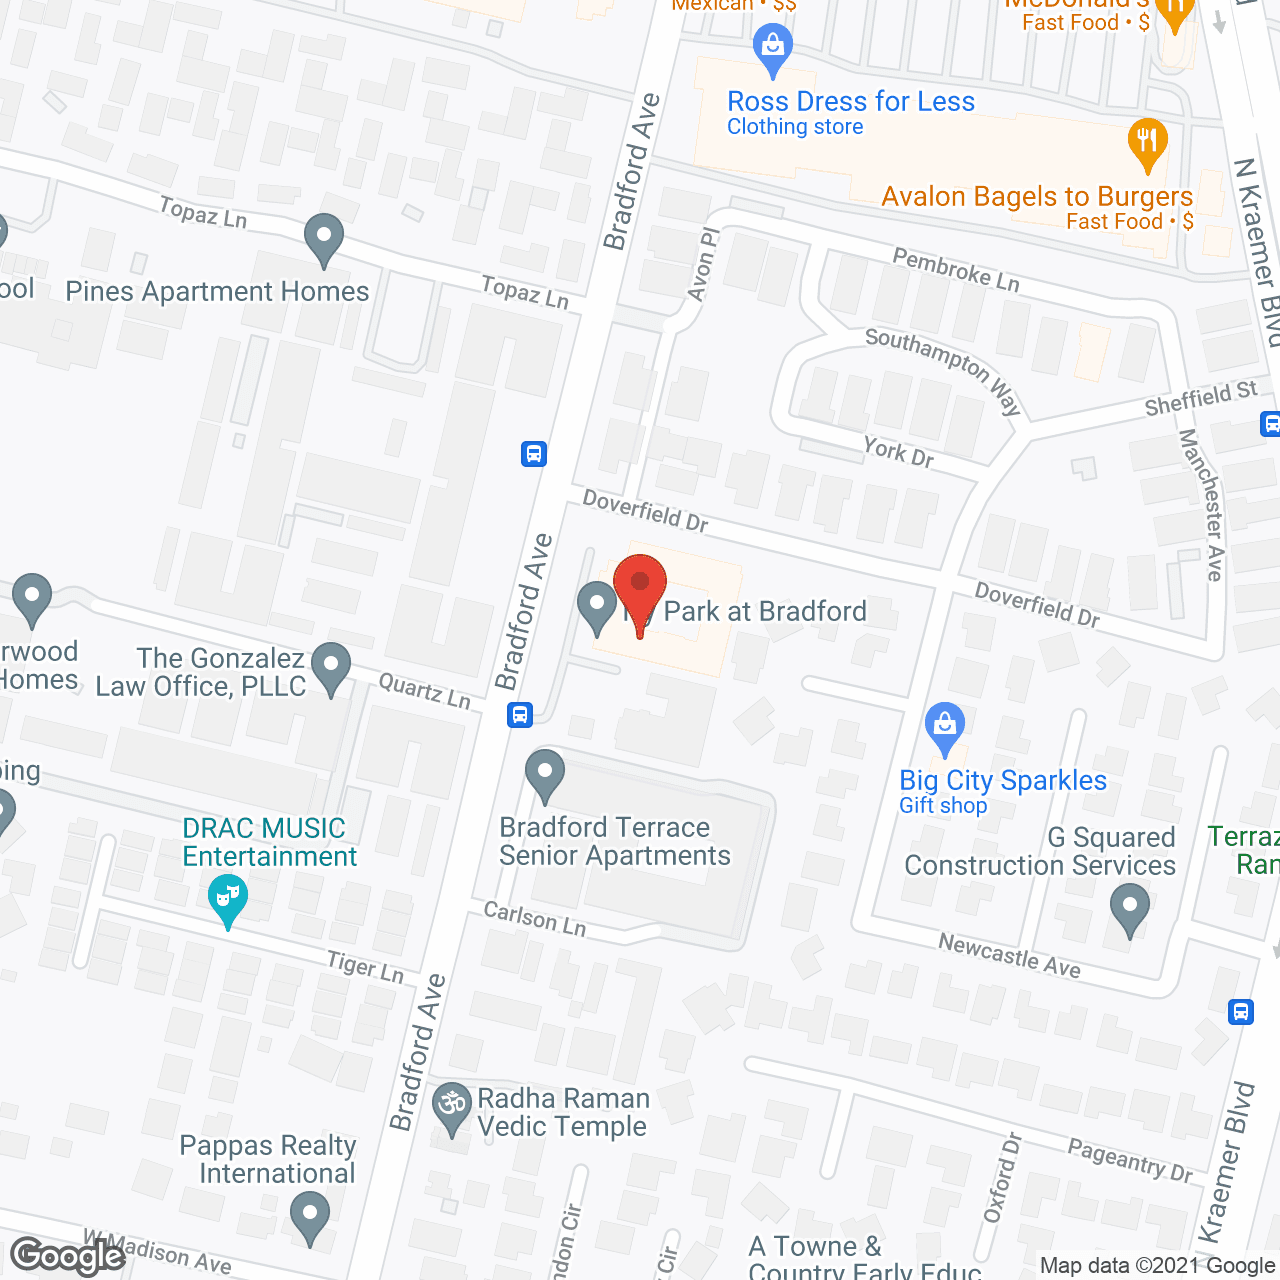 Ivy Park at Bradford in google map